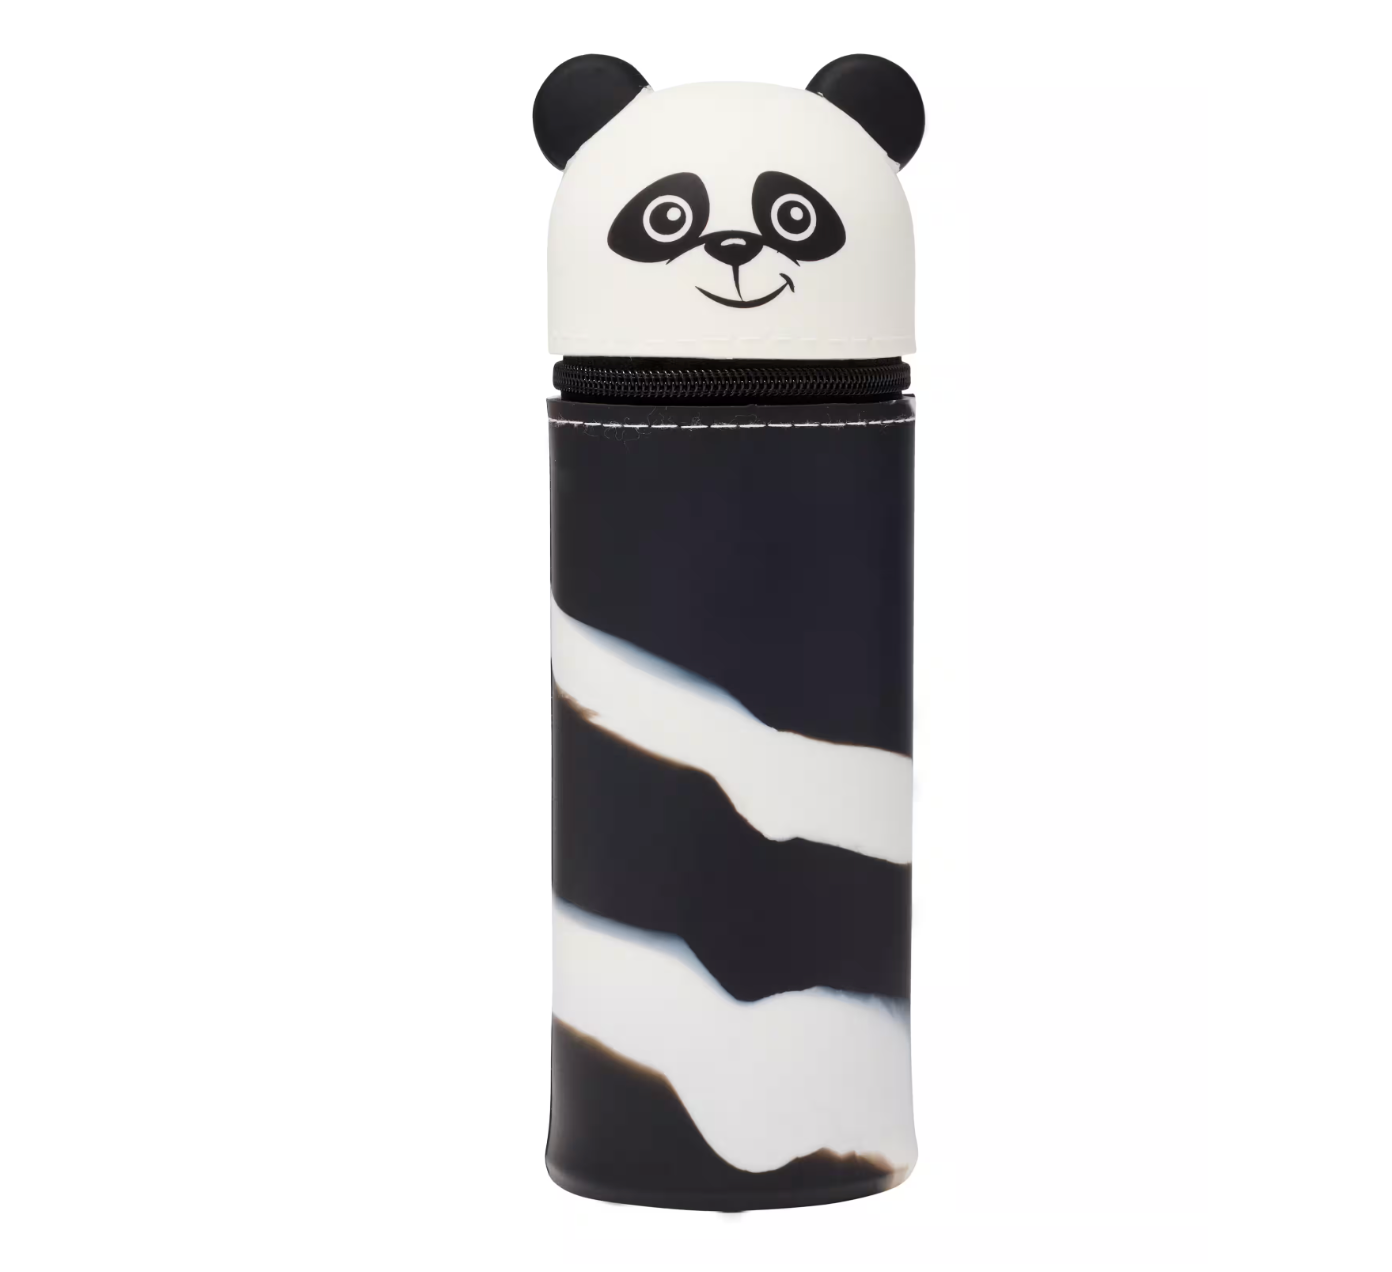 Panda Pencil Case and Stationery Kit